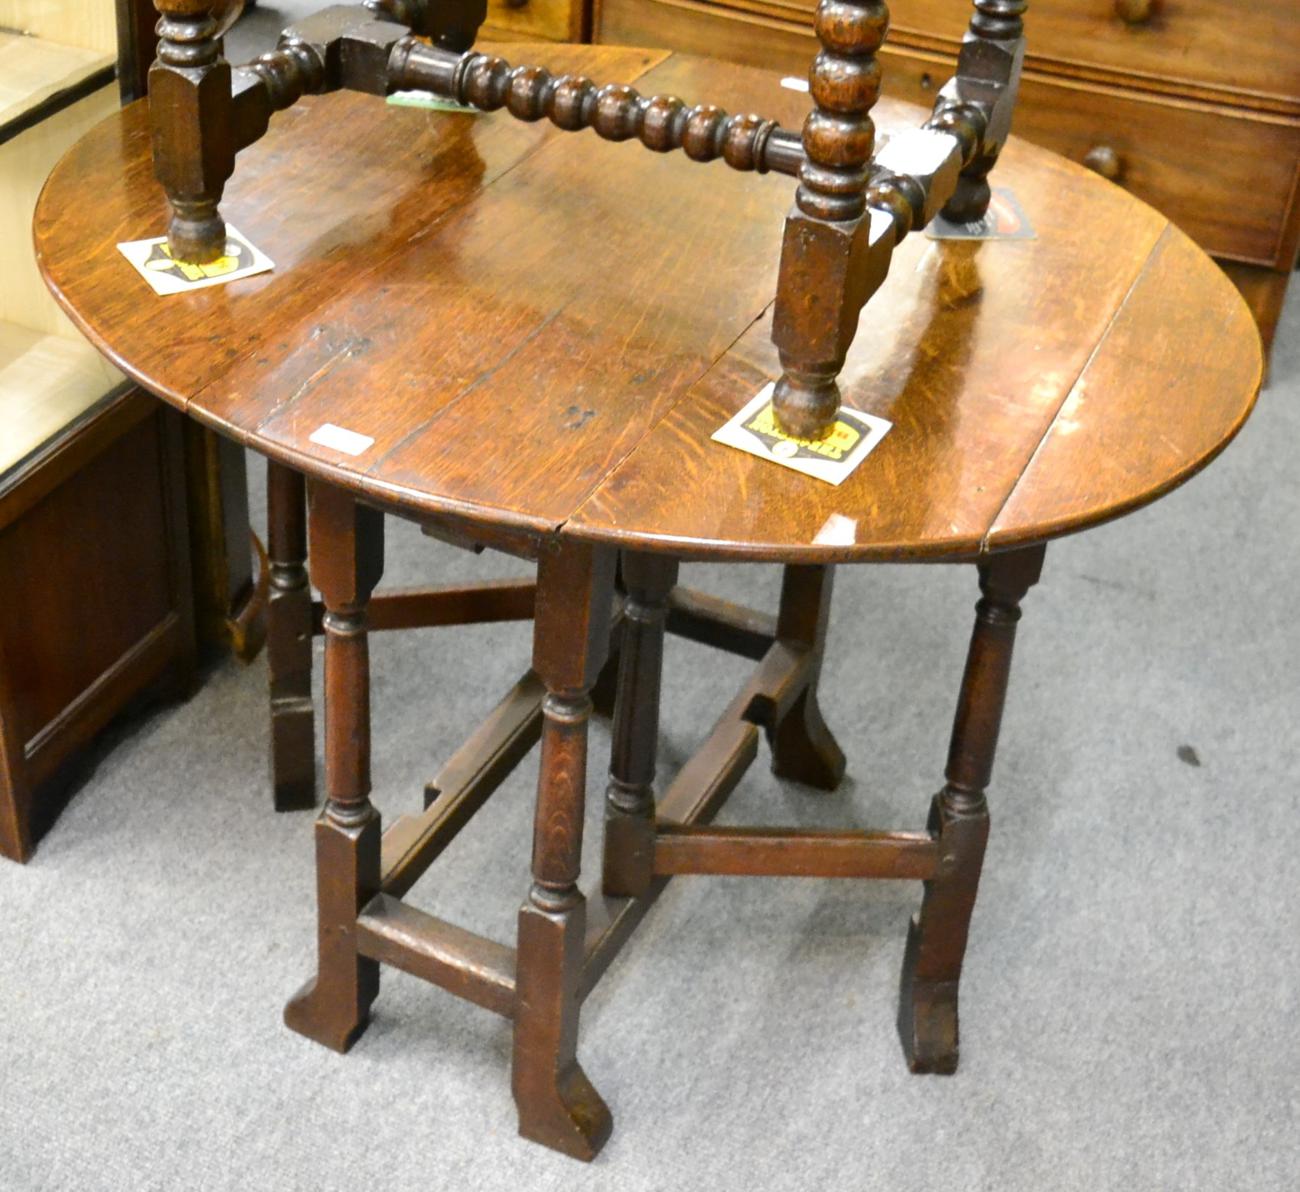 An early 18th century oak table